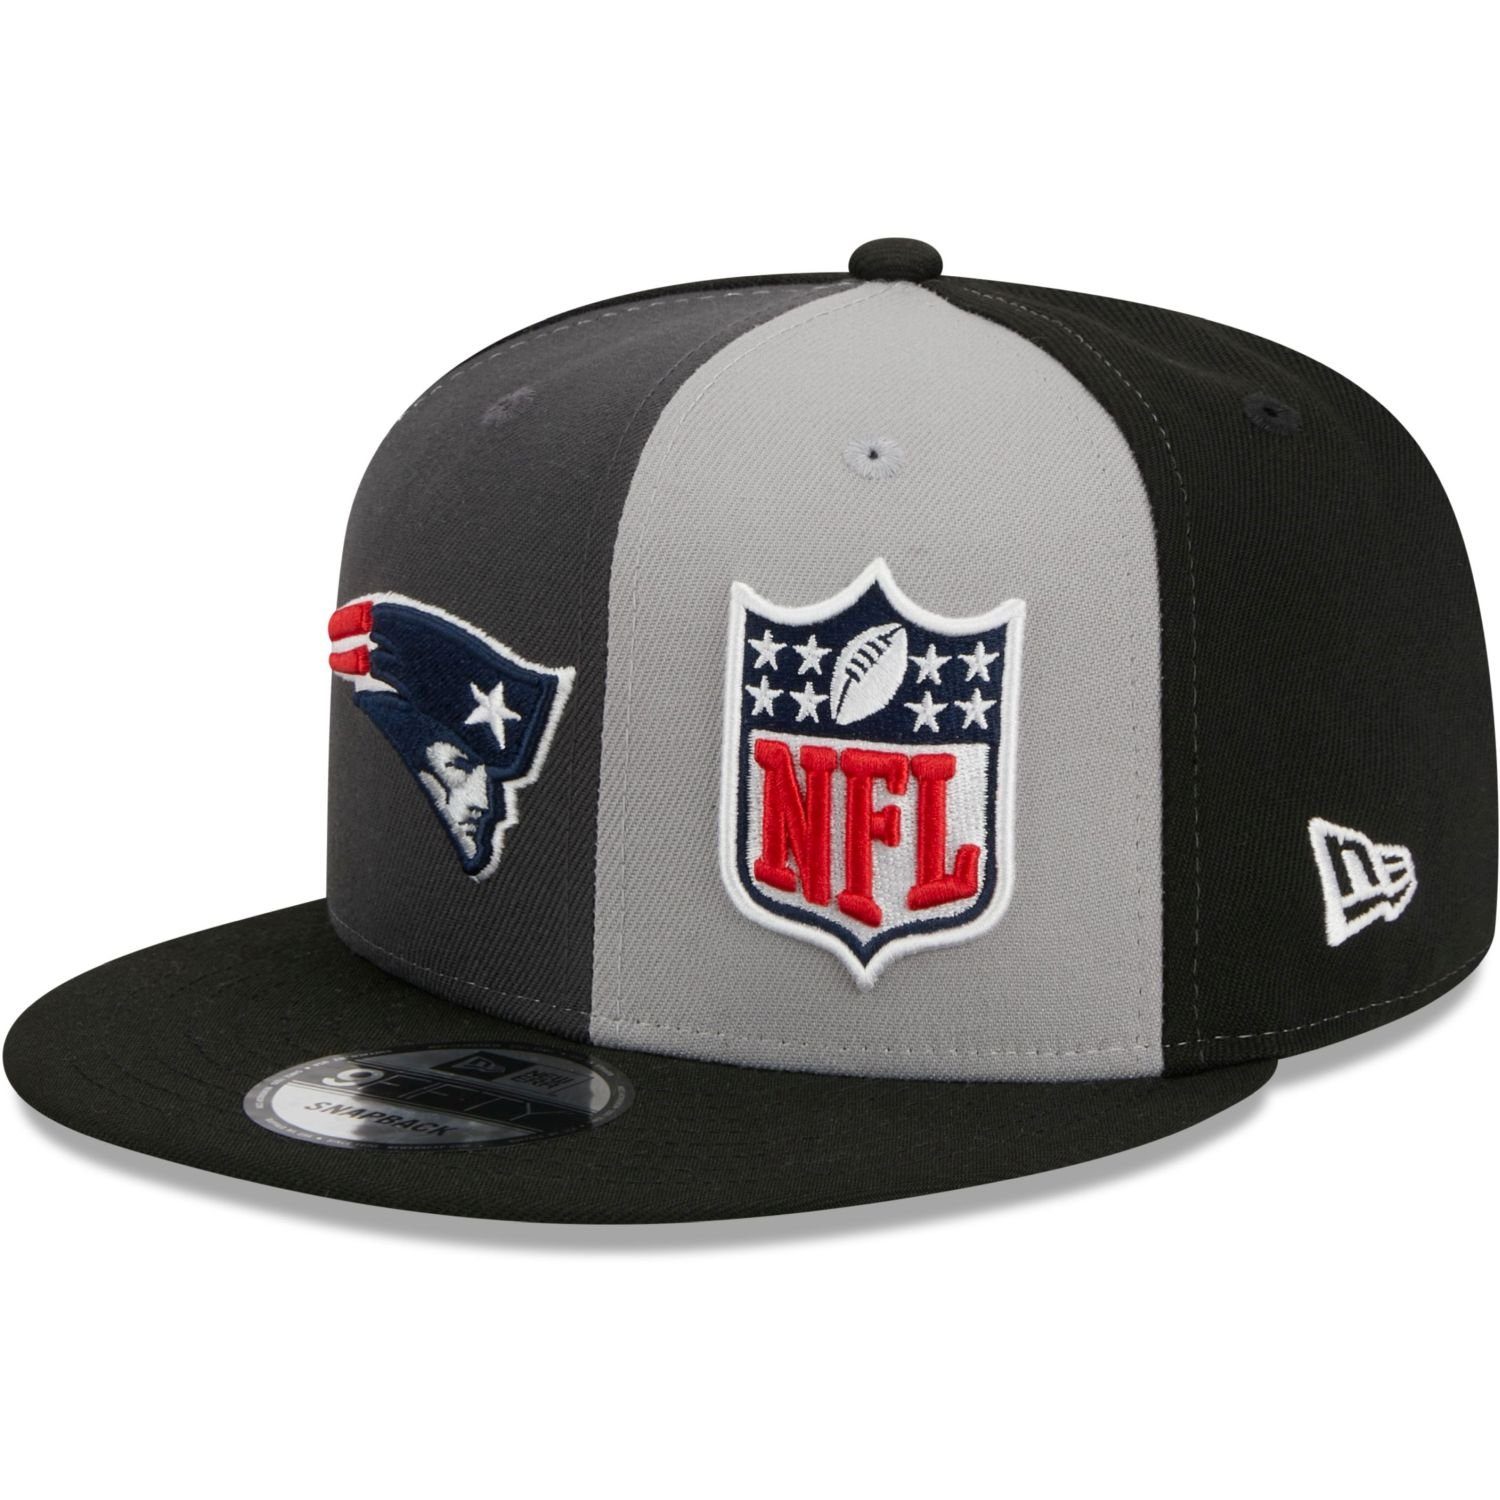 New Era Snapback Cap 9Fifty Sideline New England Patriots